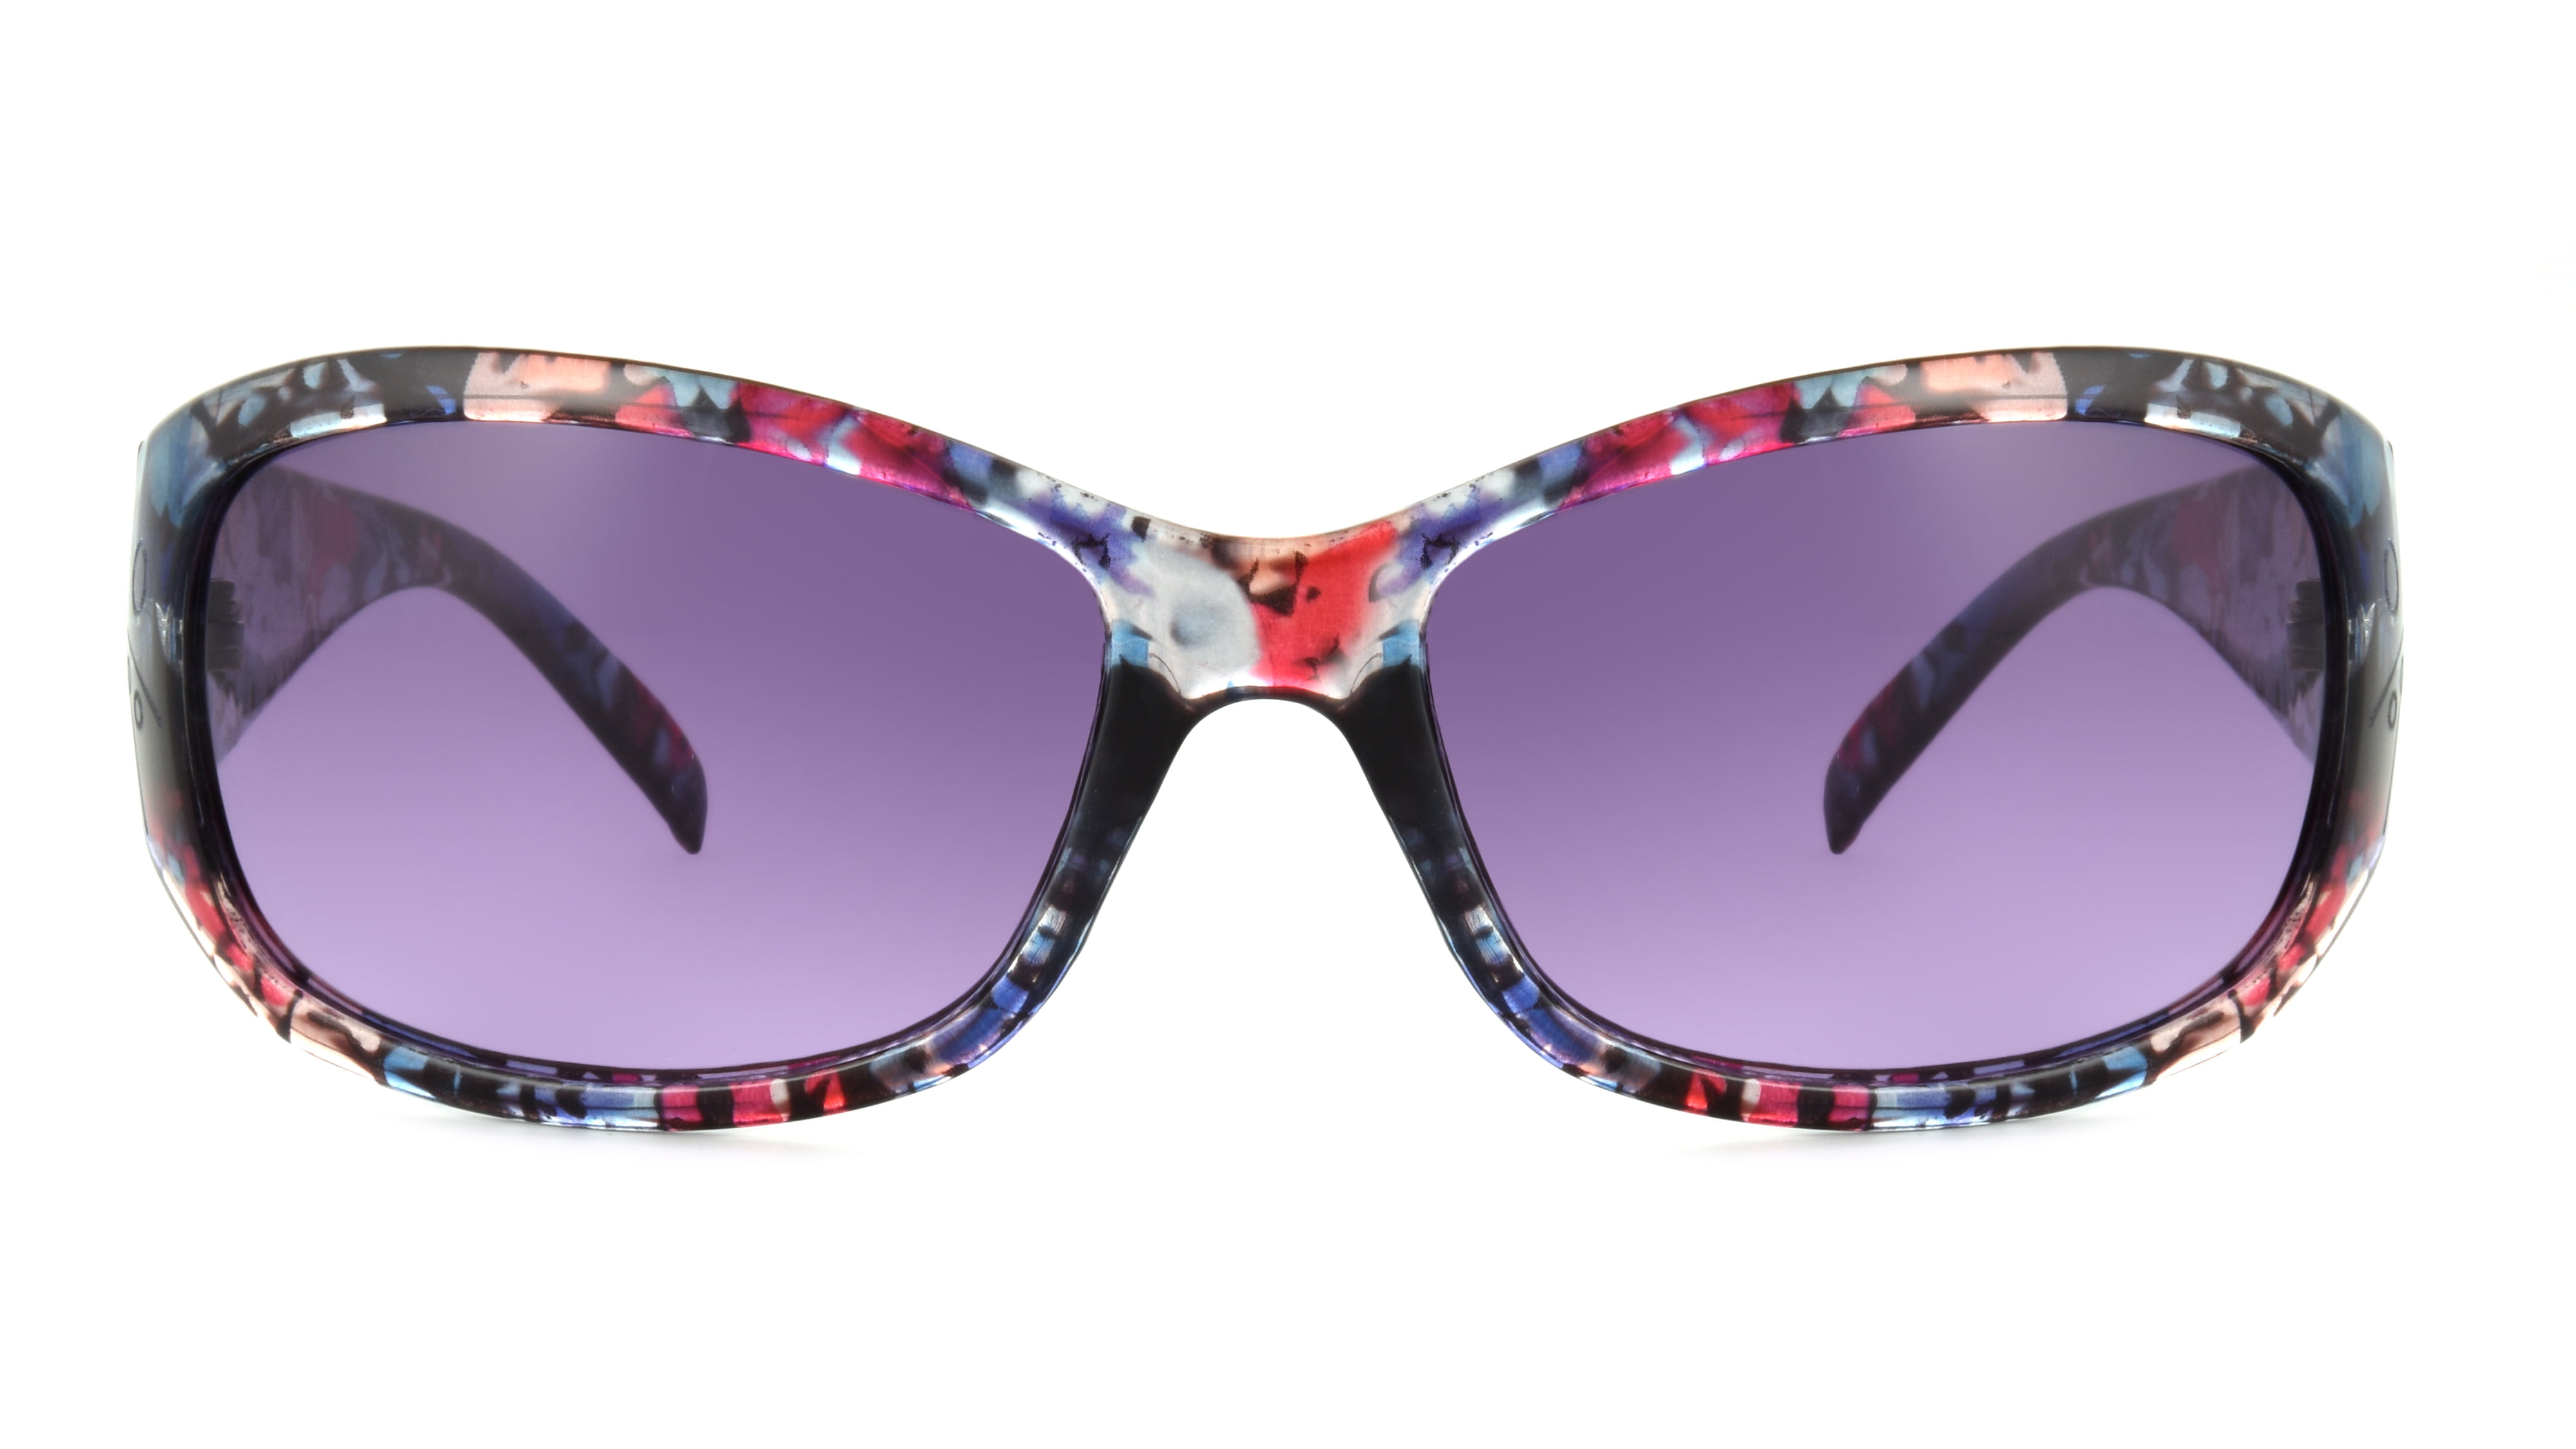 Foster Grant Women's Rose Gold Aviator Sunglasses